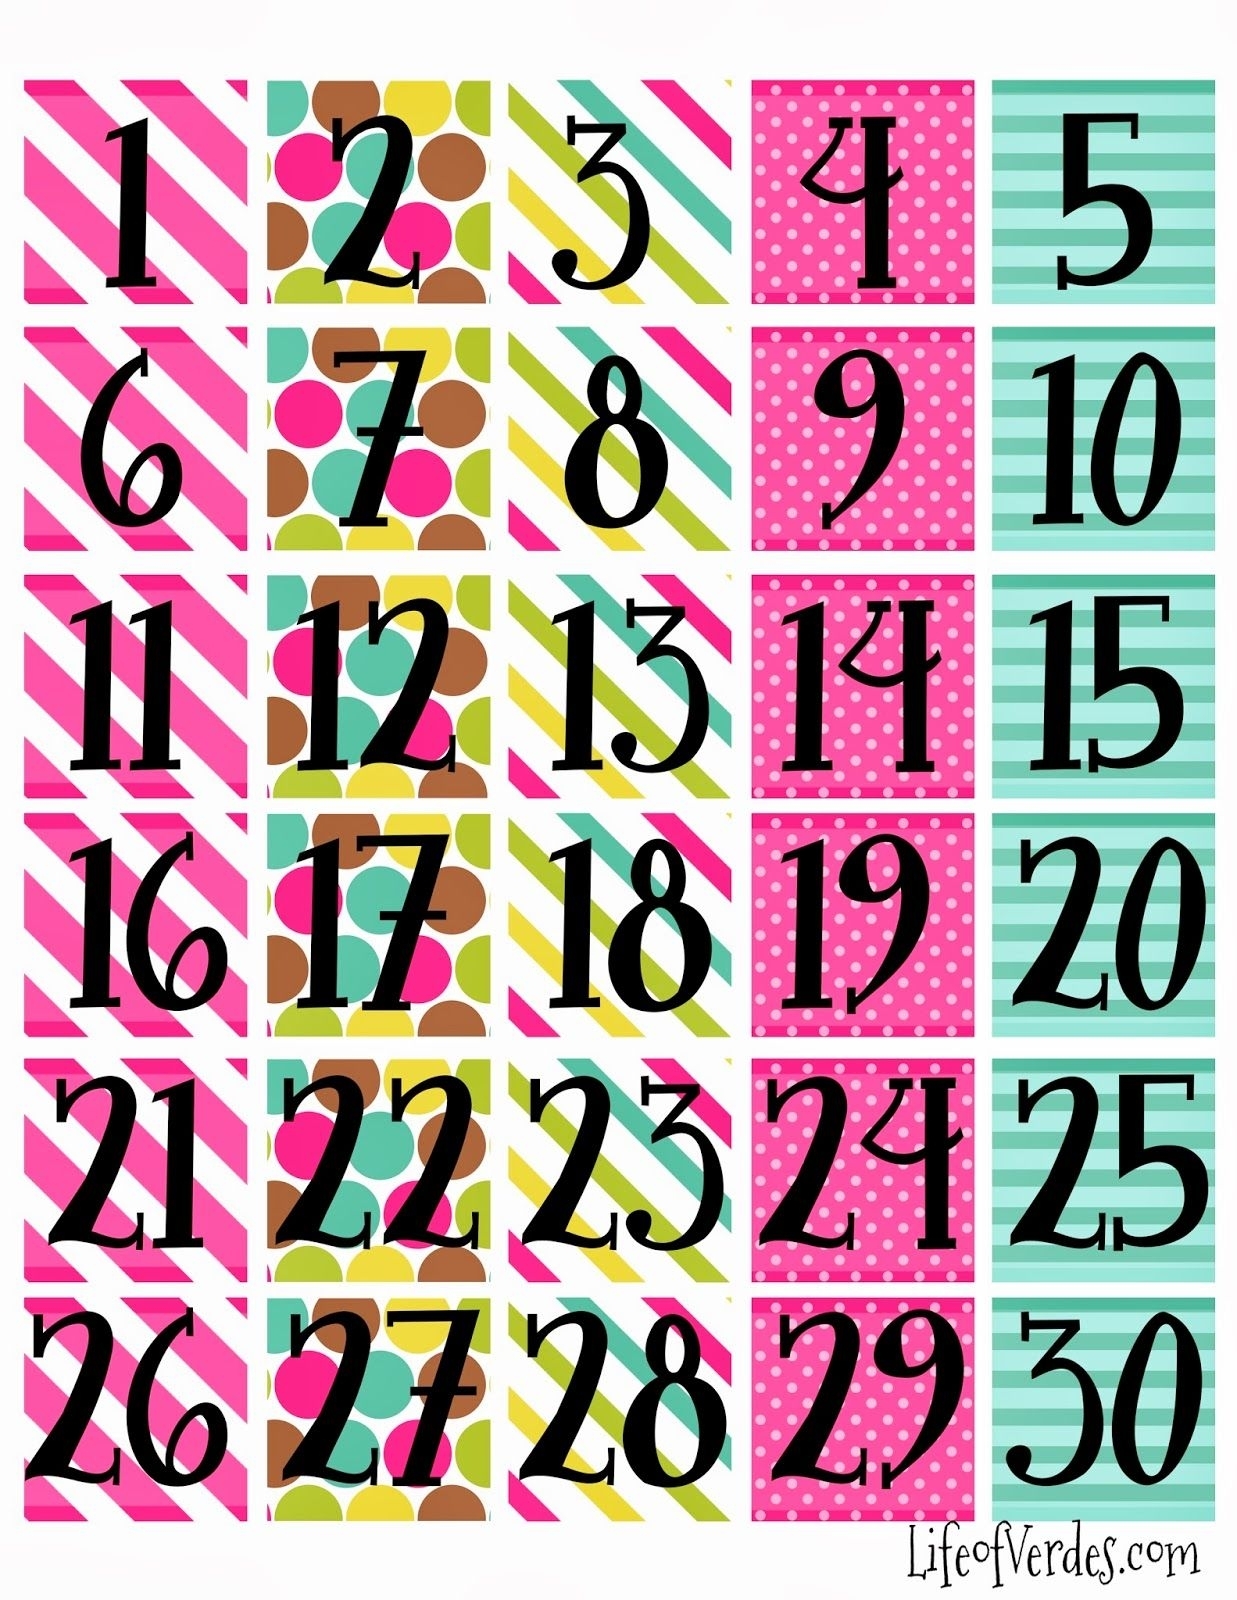 free-printable-calander-monthly-headers-month-calendar-printable